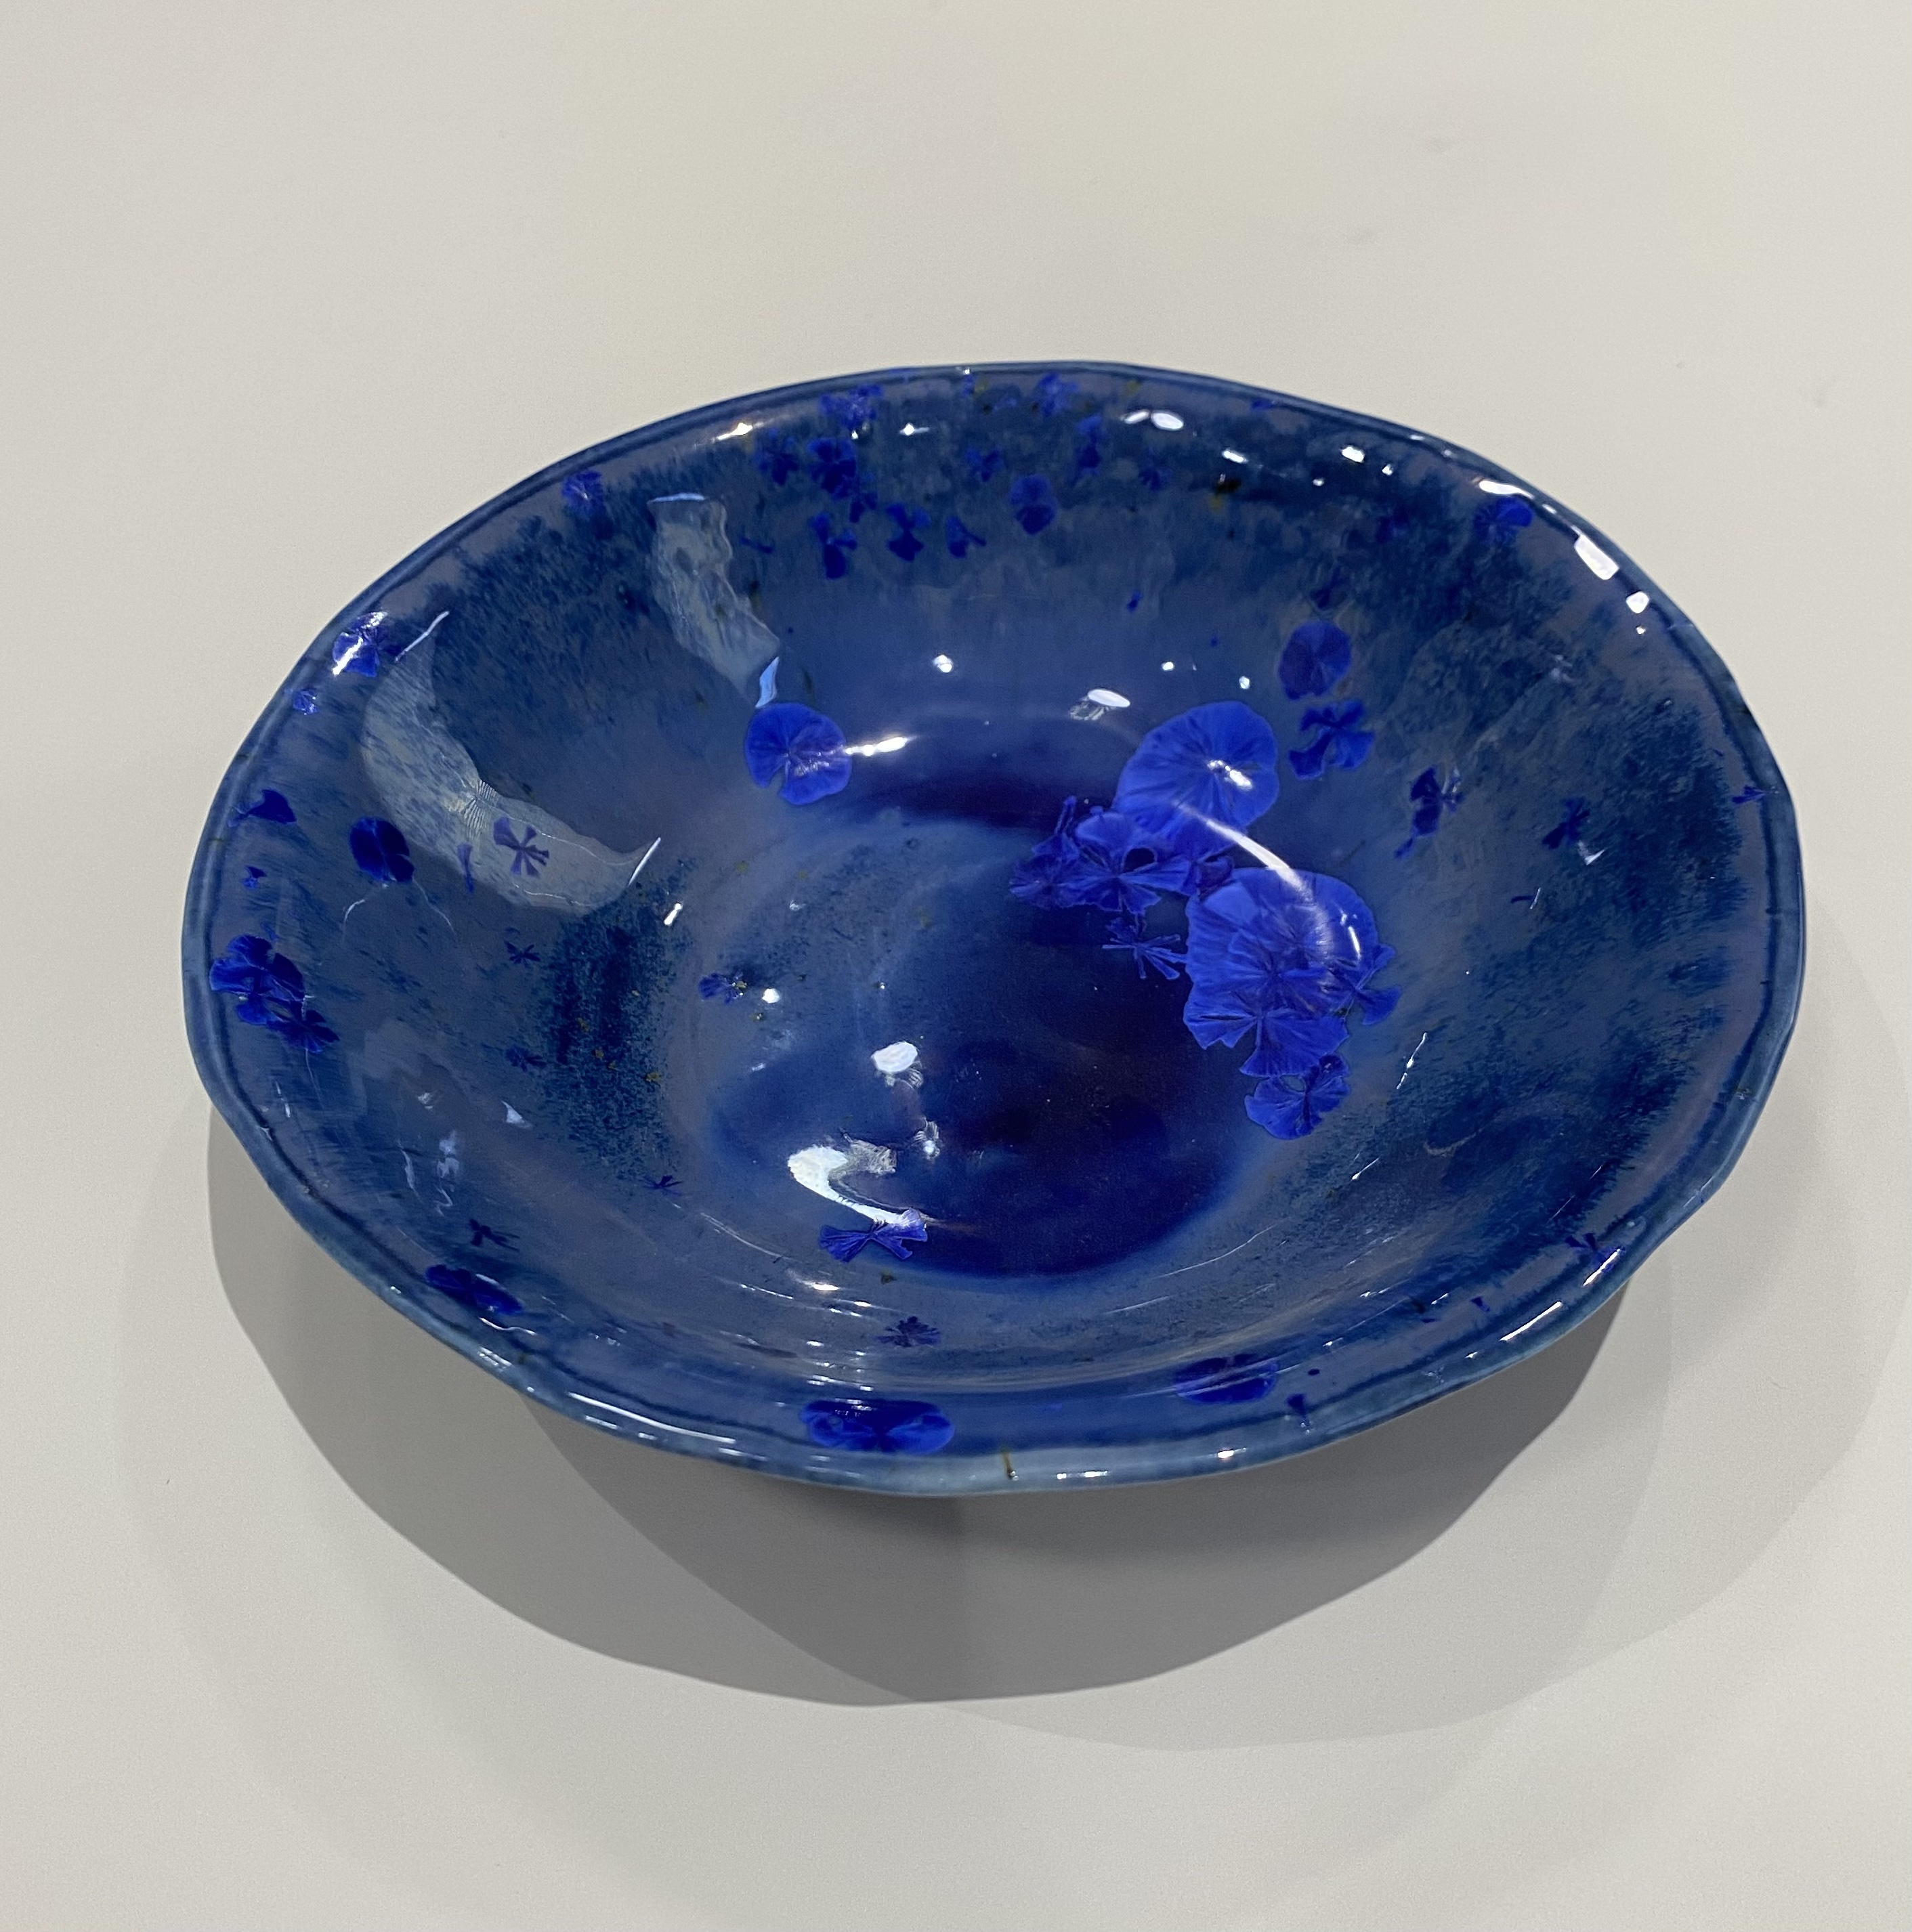 Blue Crystal Bowls
Ceramic
8" diameter
$30.